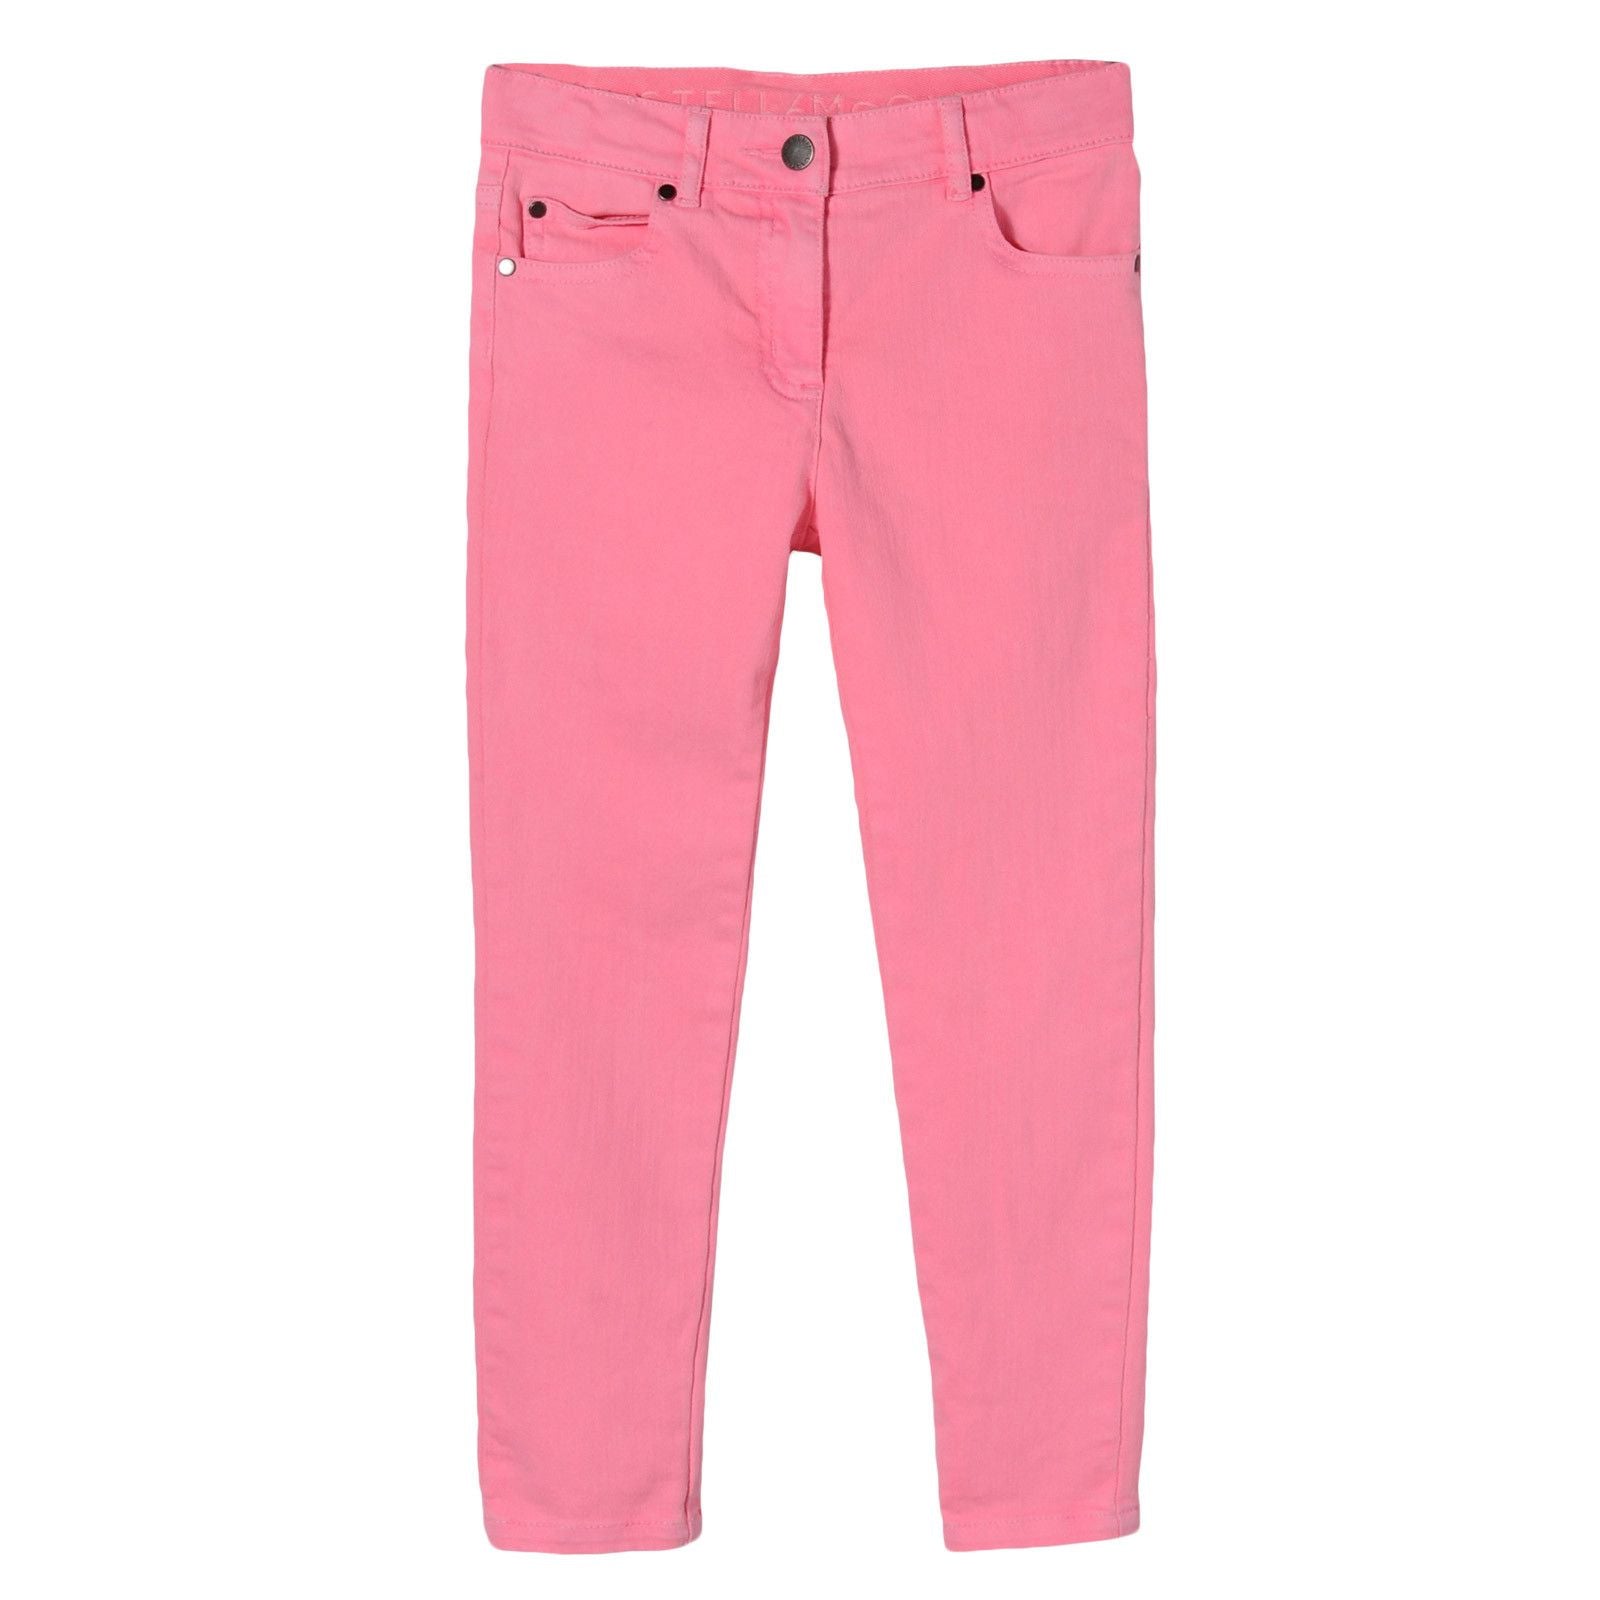 Girls Pink Cotton Jersey Trousers - CÉMAROSE | Children's Fashion Store - 1